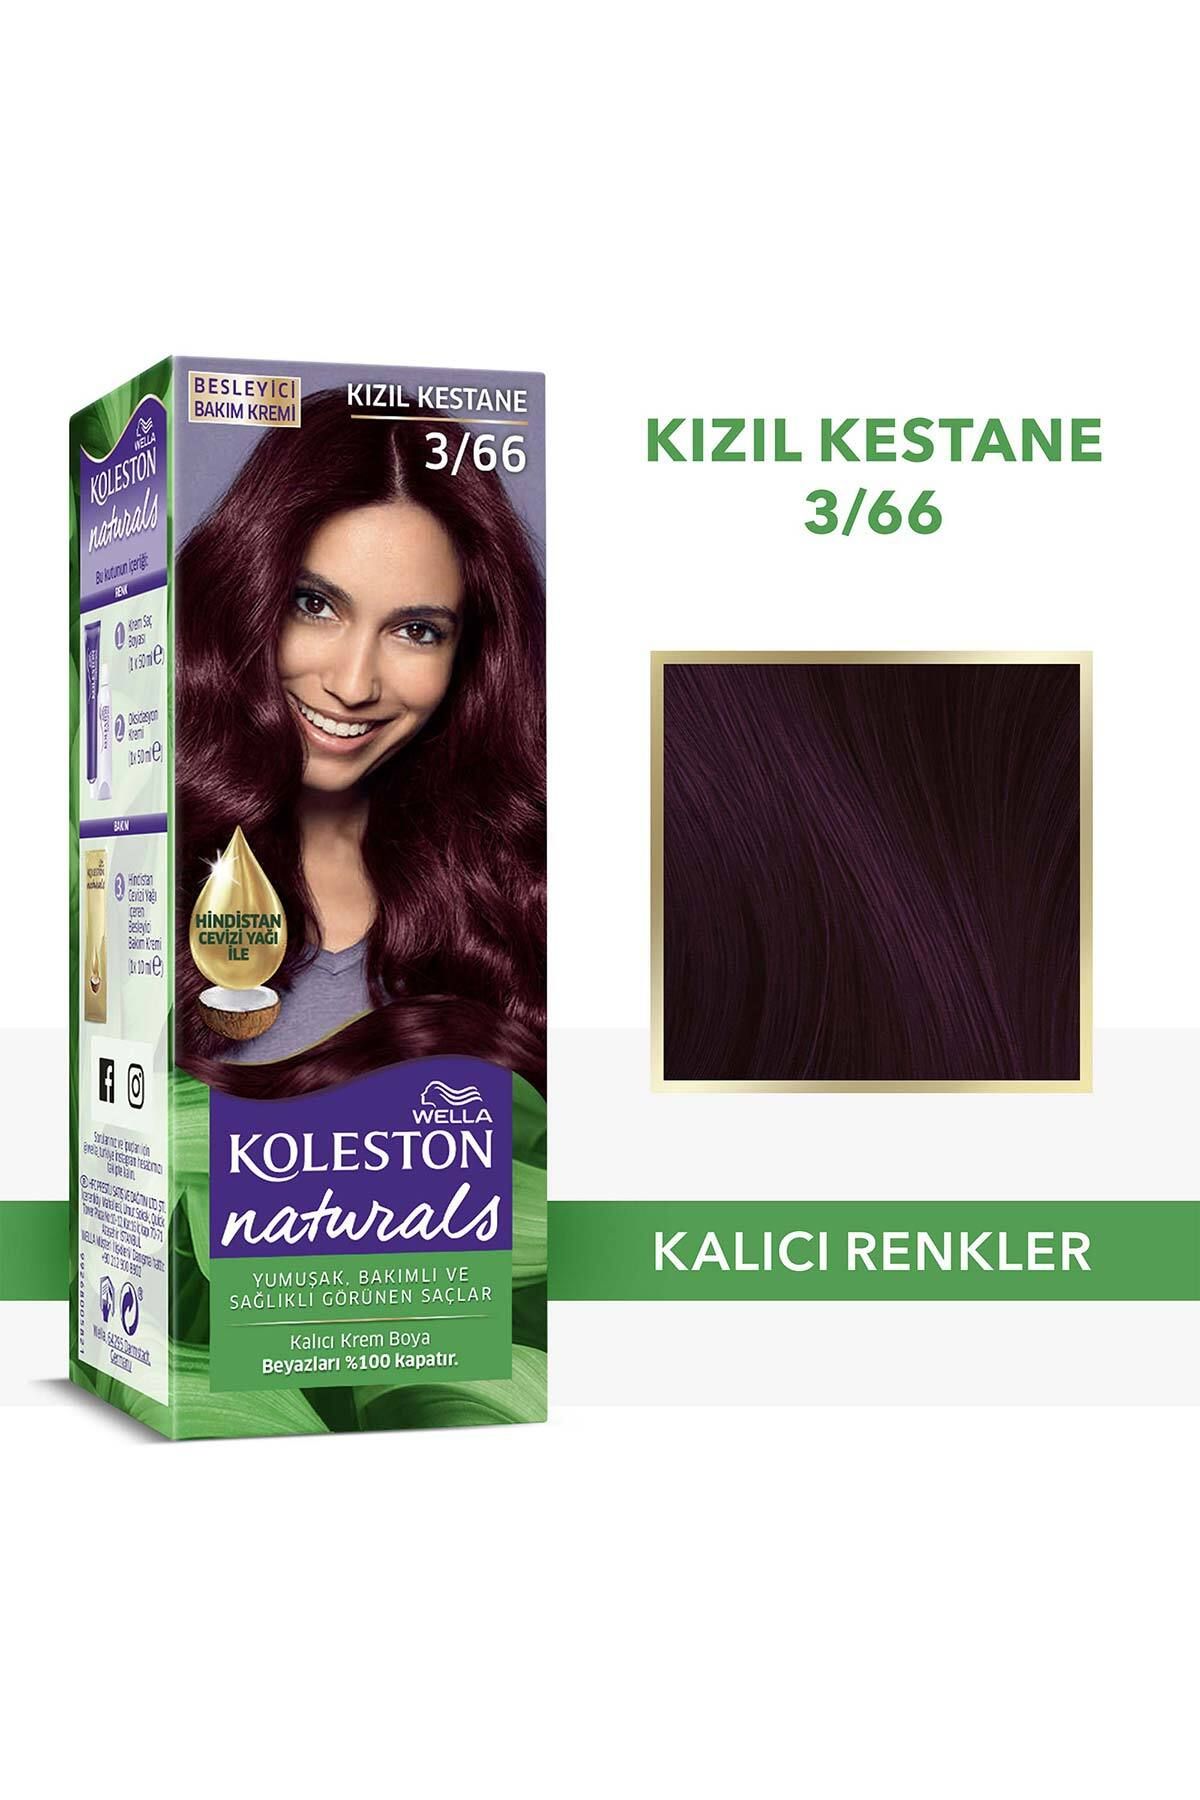 Wella Koleston Naturals Saç Boyası 3/66 Kızıl Kestane